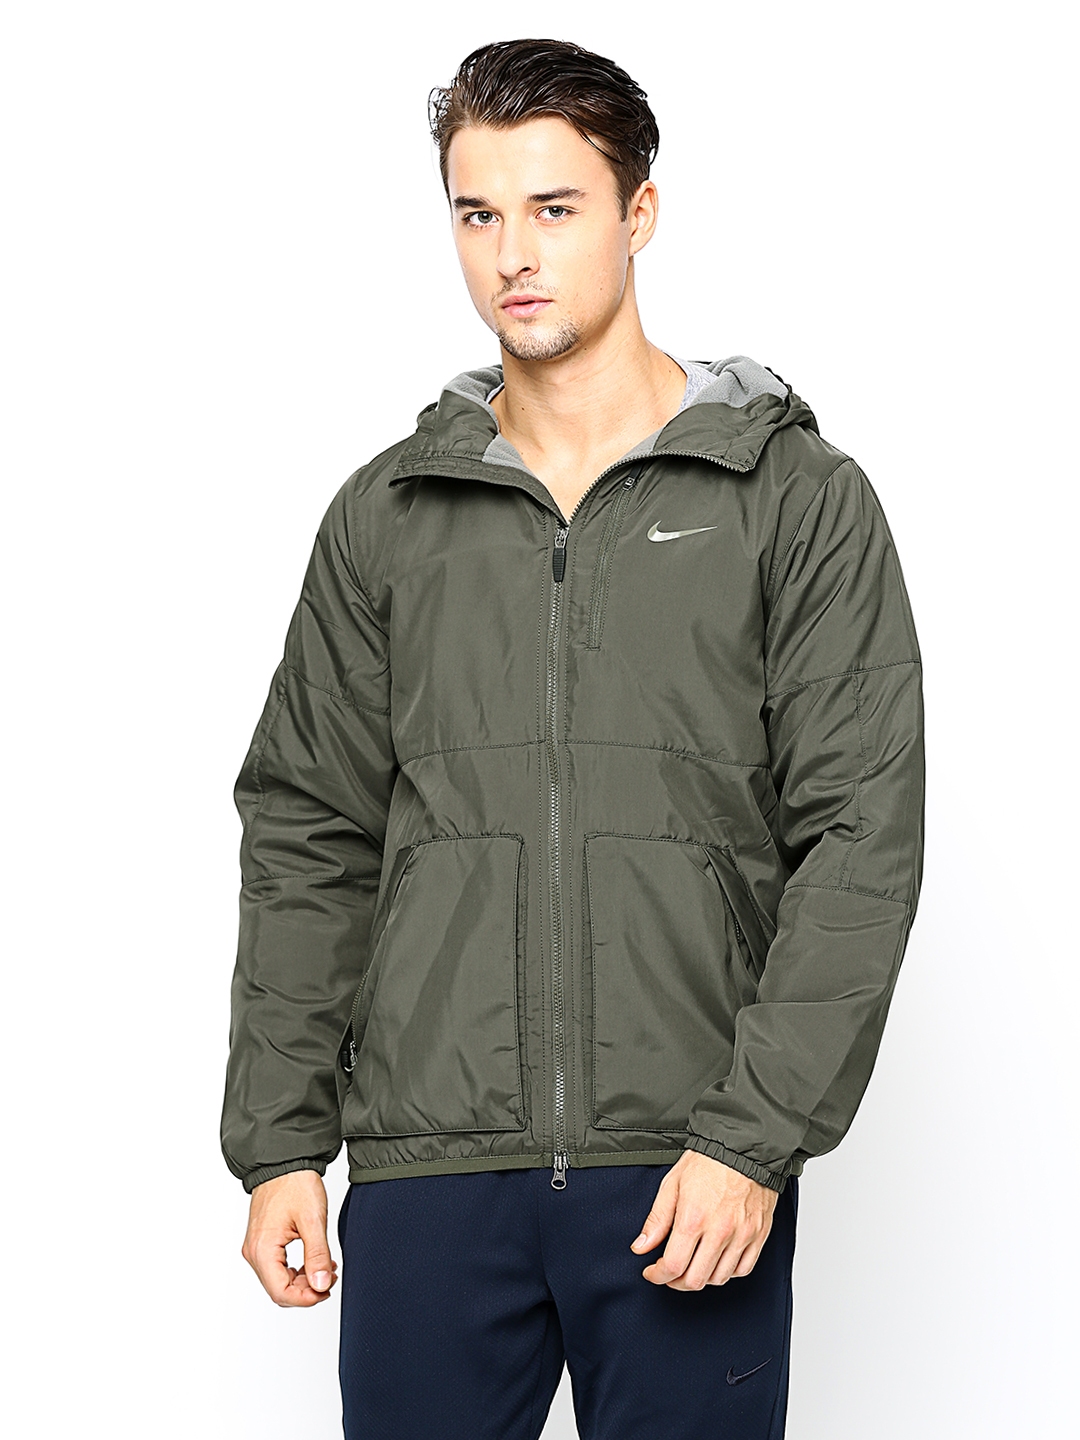 Draak behuizing Ambitieus Buy Nike Men Olive Green EM NIKE ALLIANCE Jacket - Jackets for Men 472887 |  Myntra